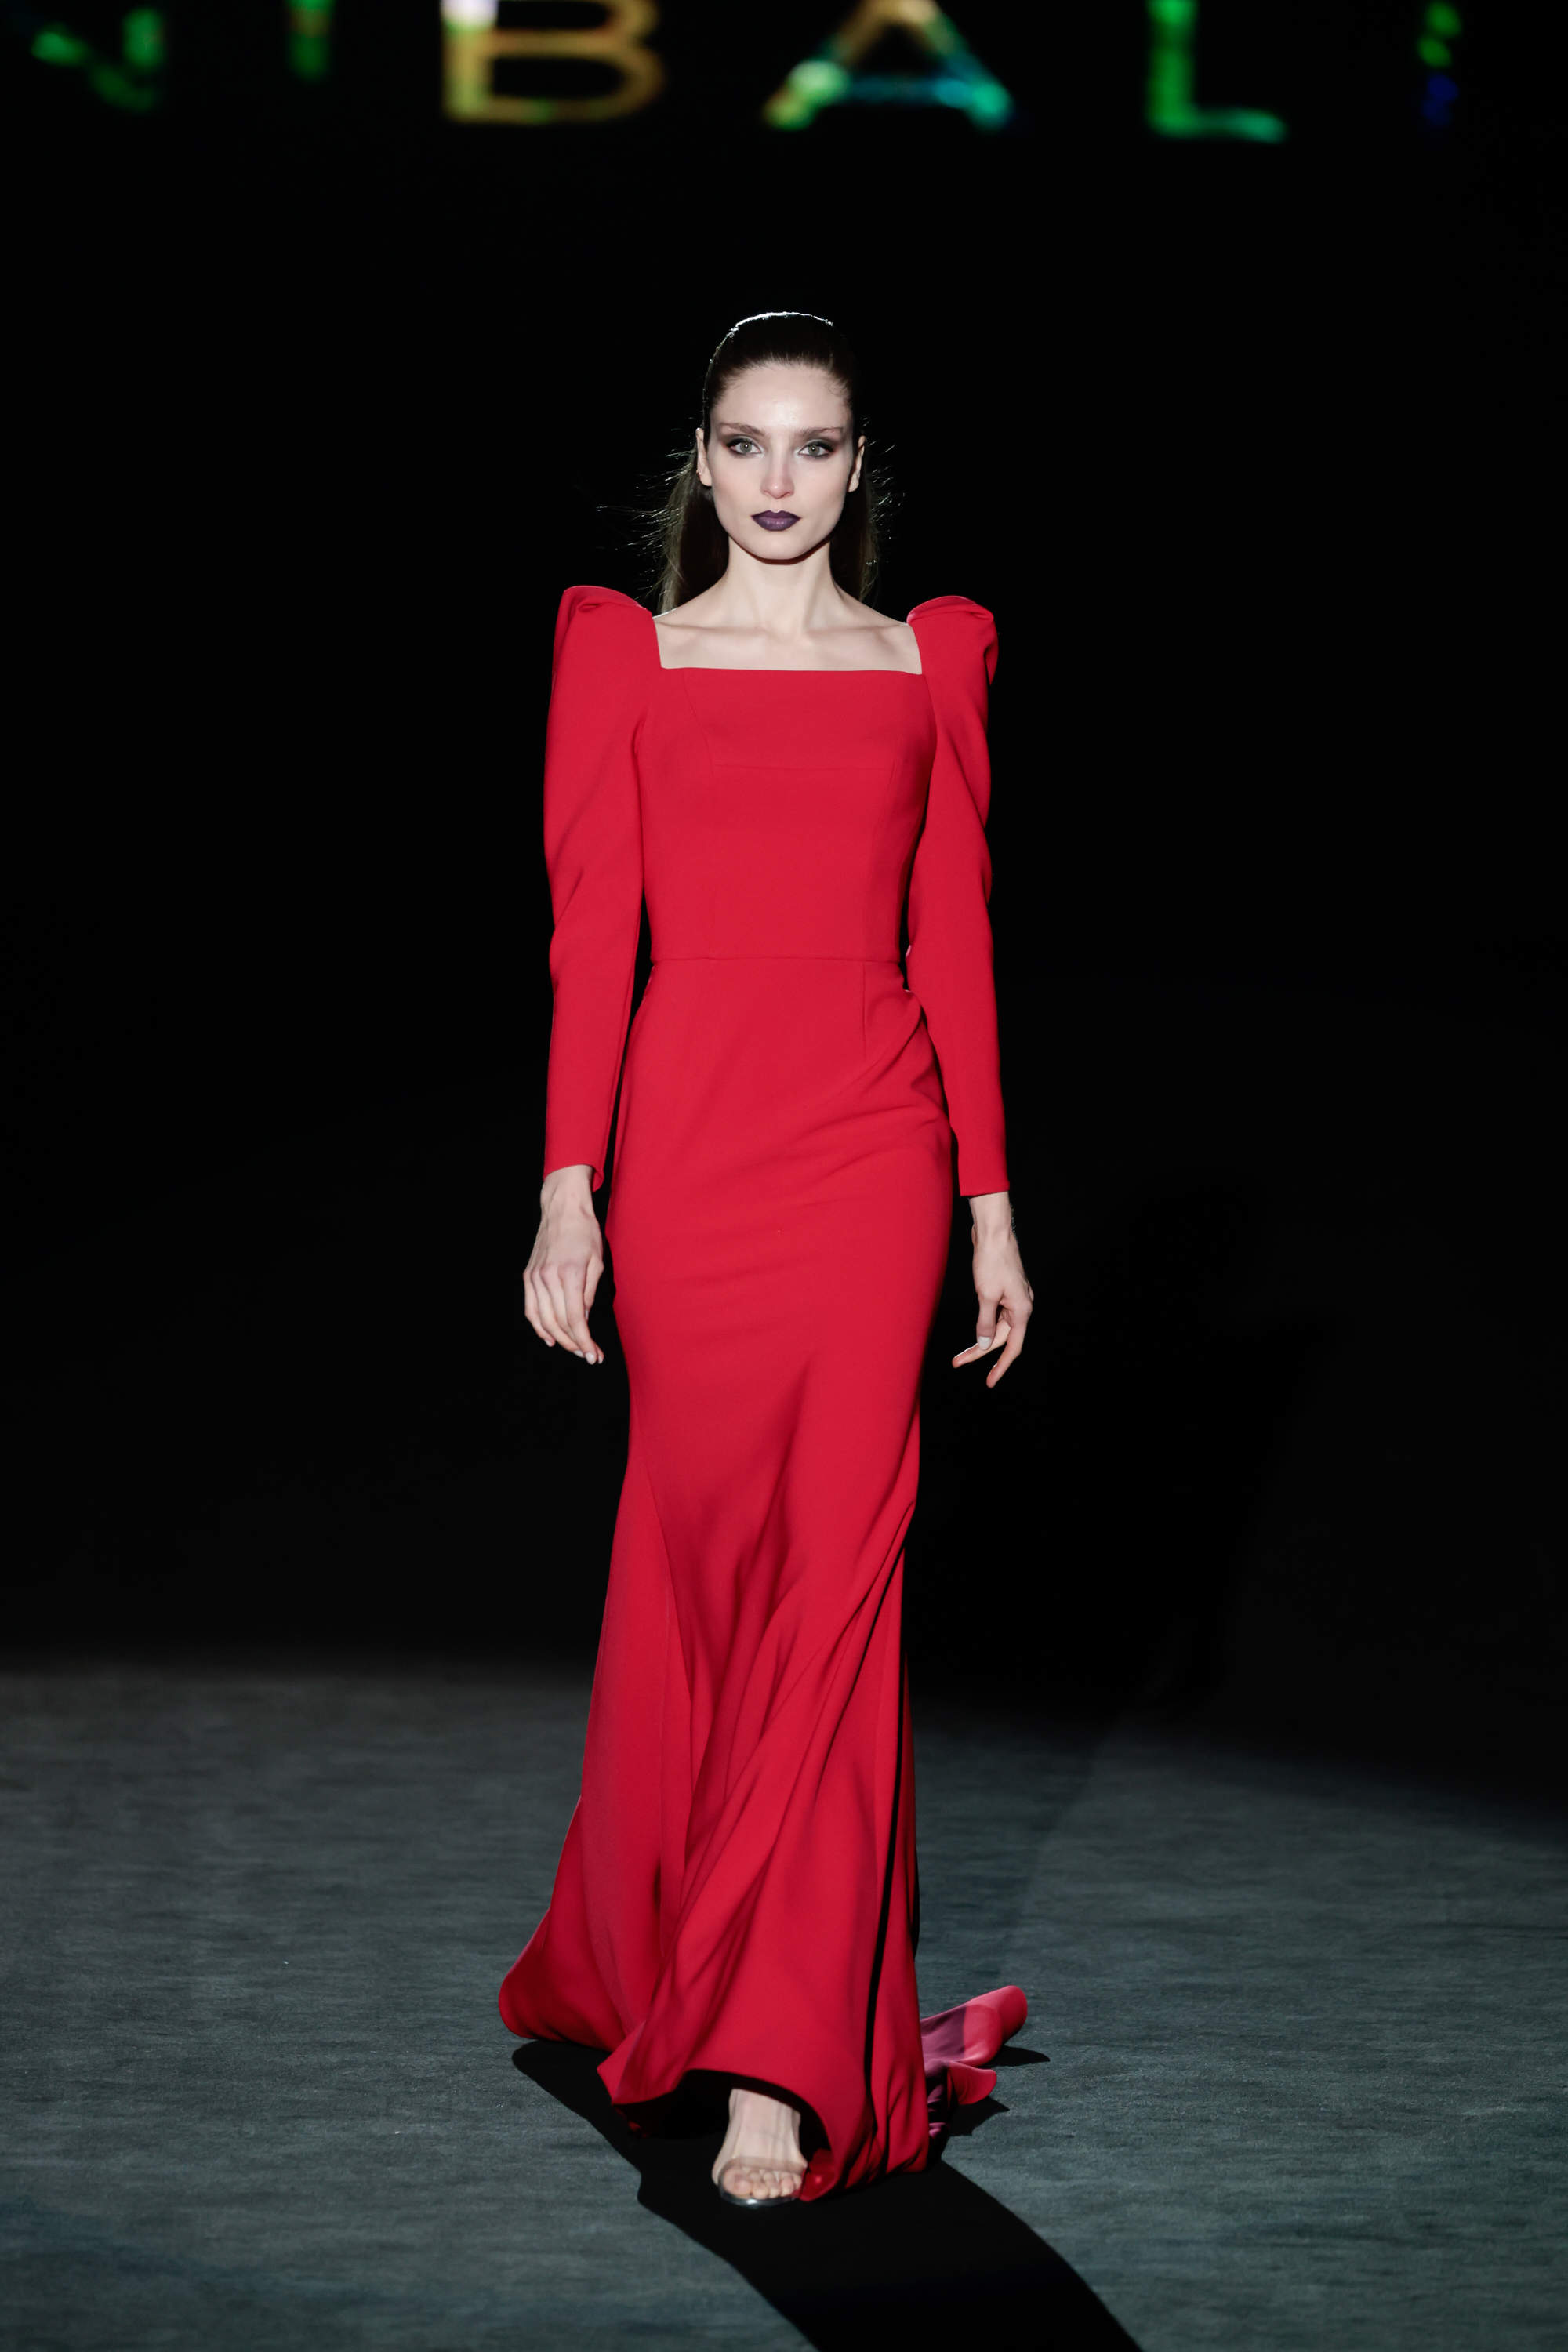 Hannibal laguna madrid fashion week vestido rojo